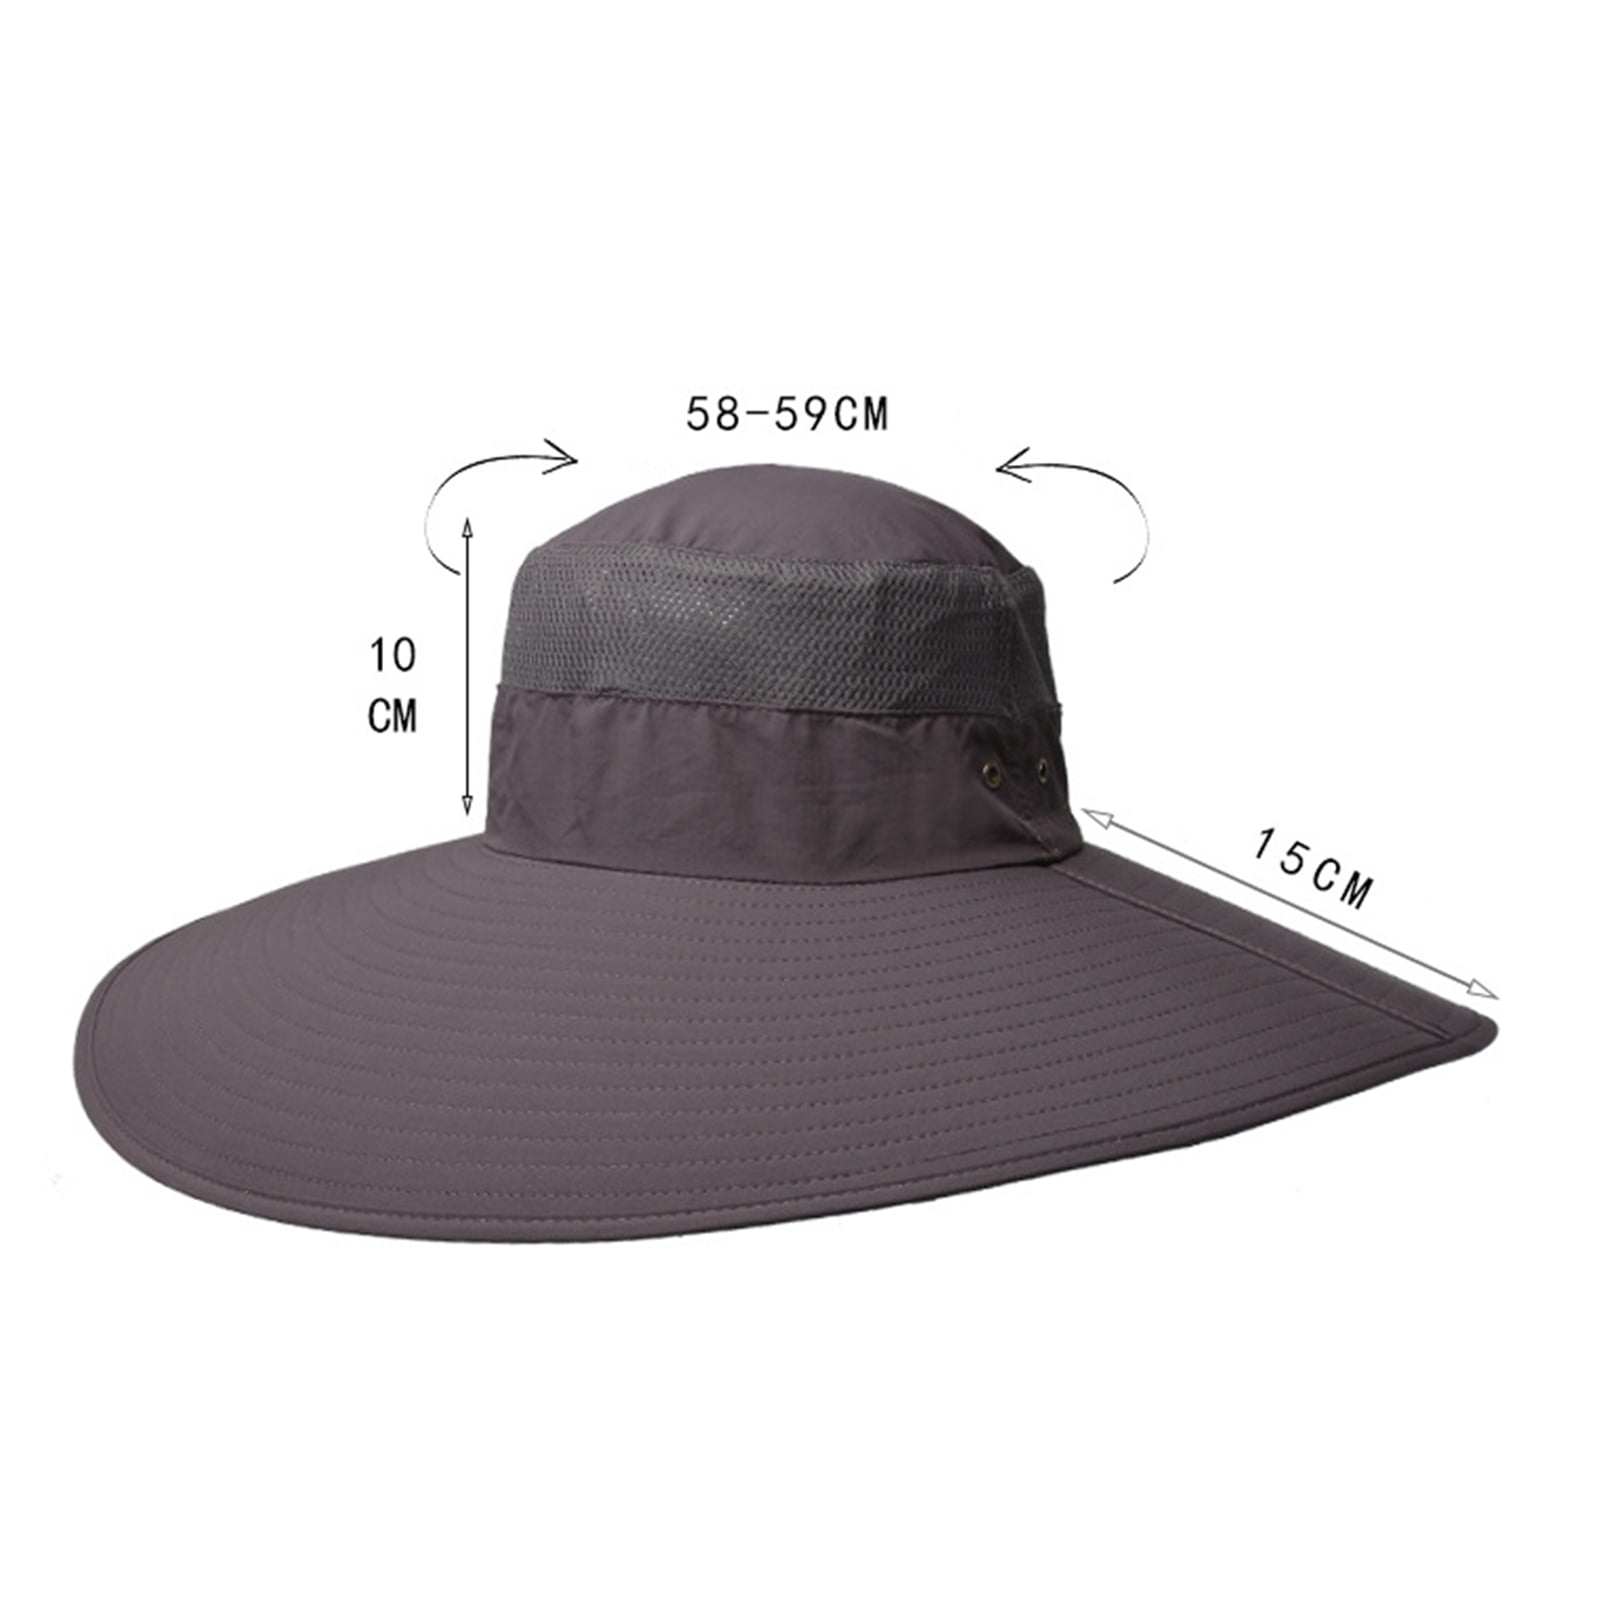 Diannasun Super Wide Brim Sun Hat-Upf50+ Waterproof Bucket Hat For Fishing, Hiking, Camping, Navy Blue Other